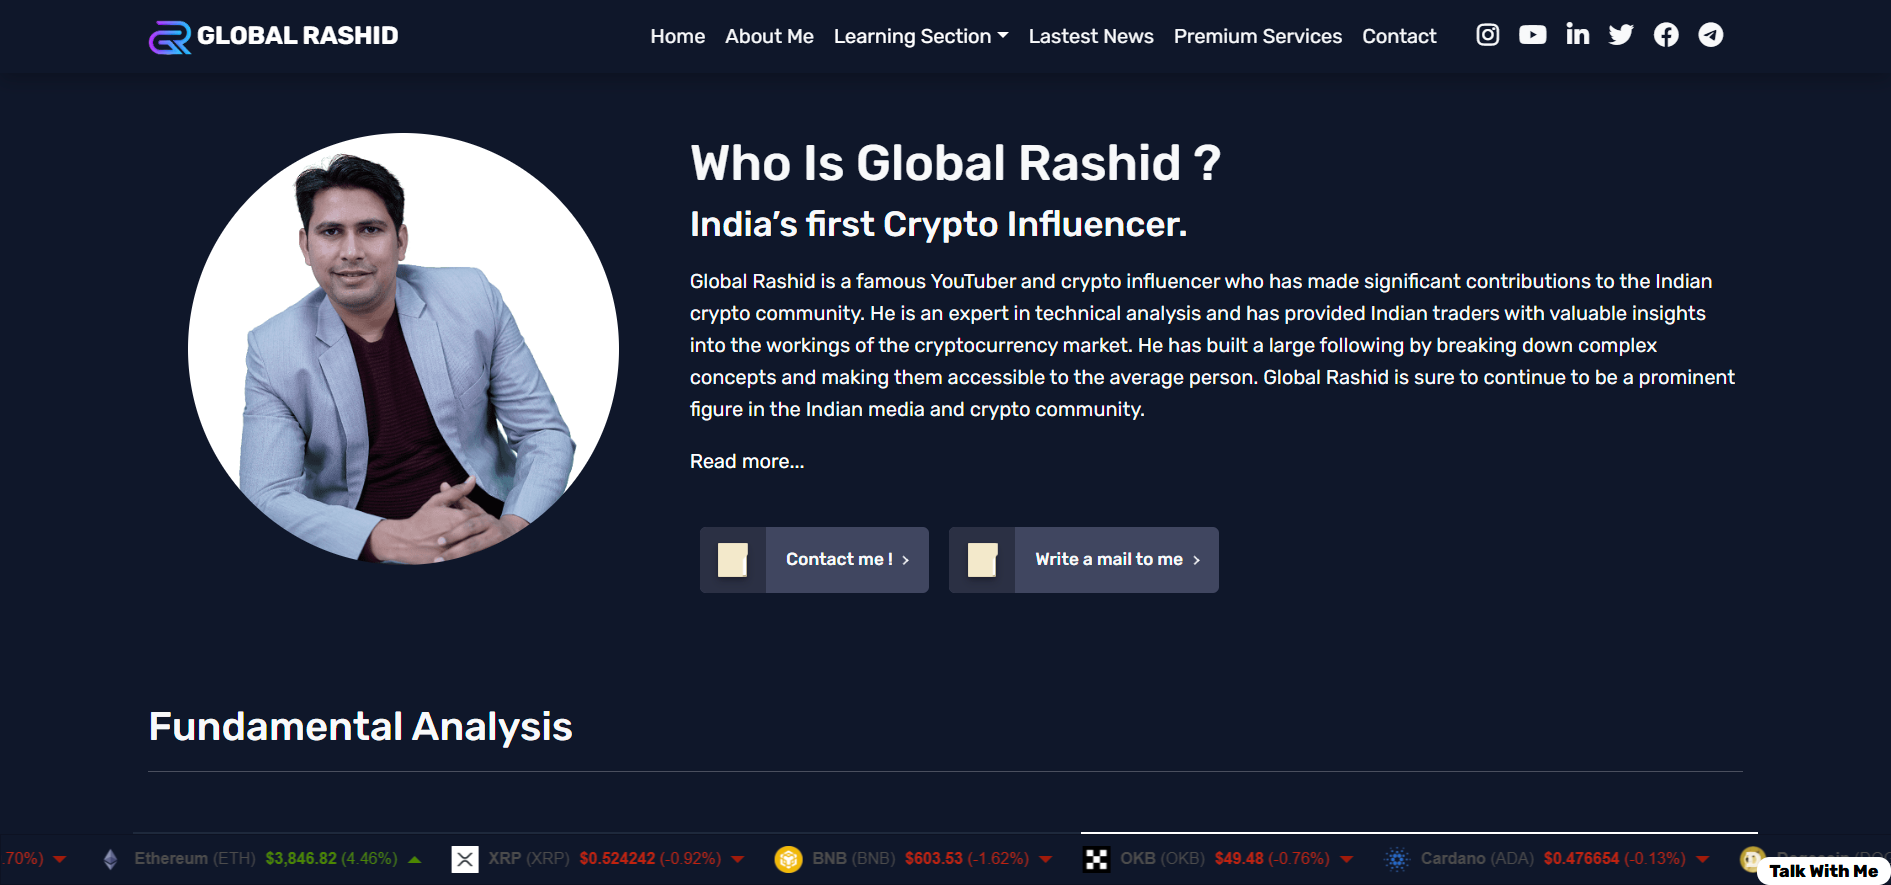 Global Rashid image